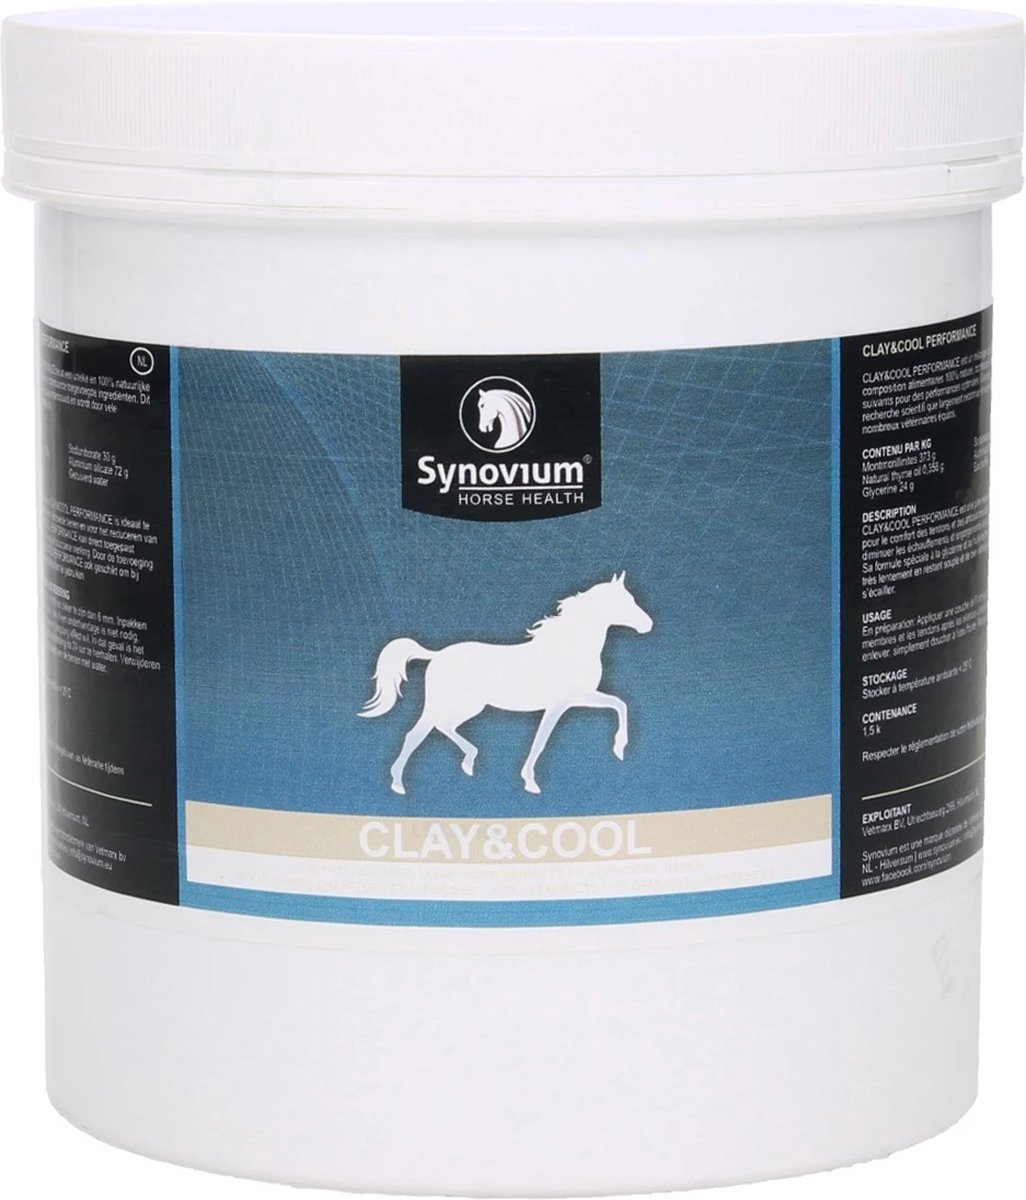 Synovium® Clay & Cool 5 kilo